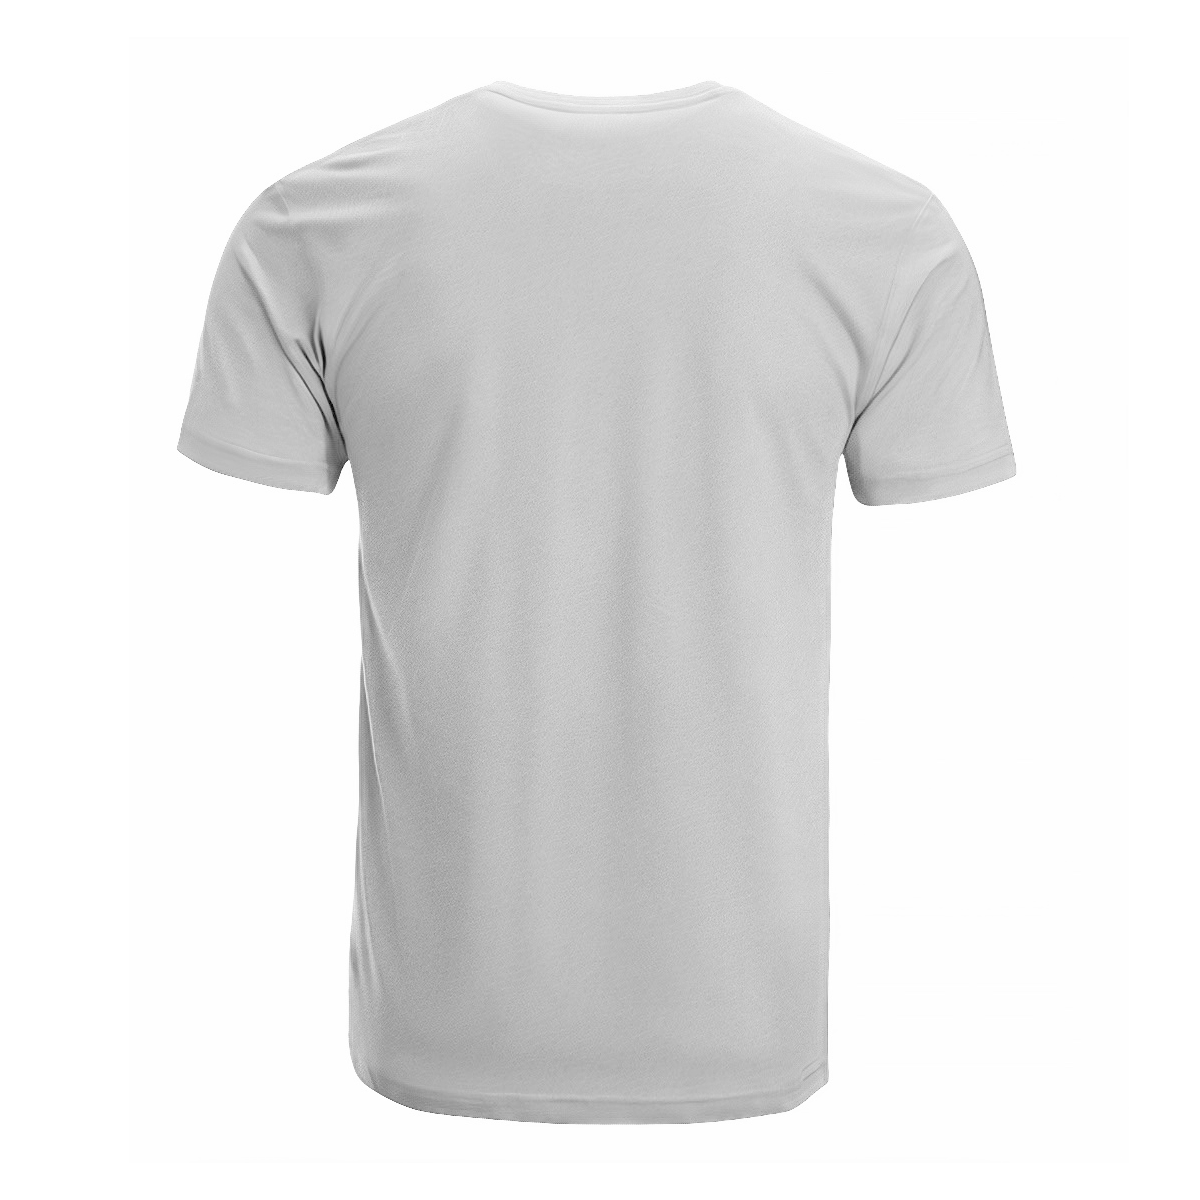 Elphinstone Tartan Crest T-shirt - I'm not yelling style